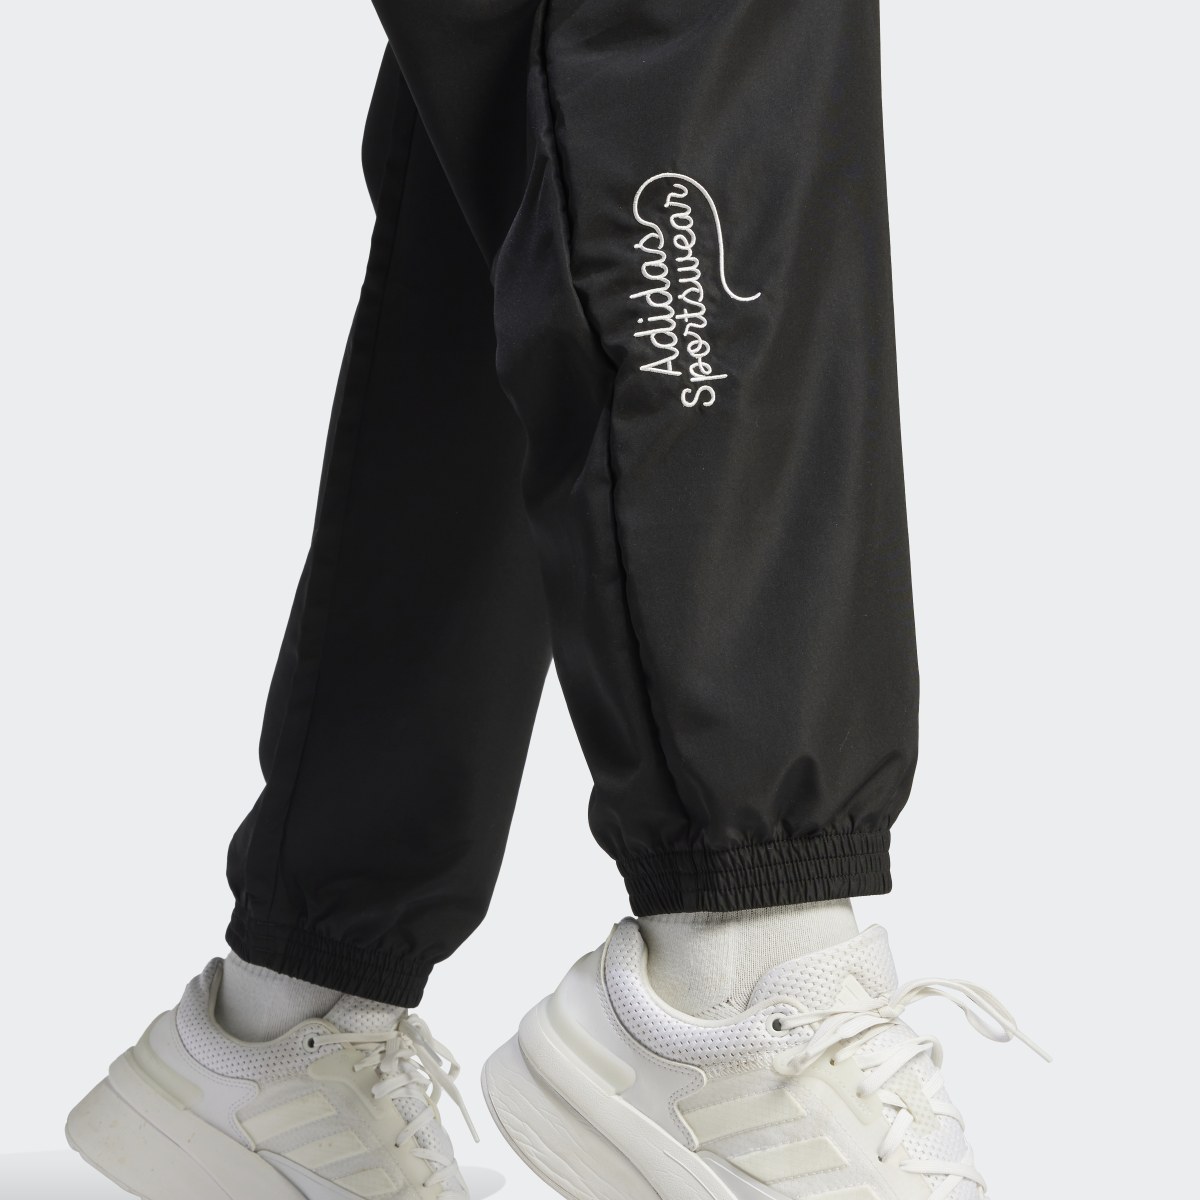 Adidas Scribble Woven Pants. 6